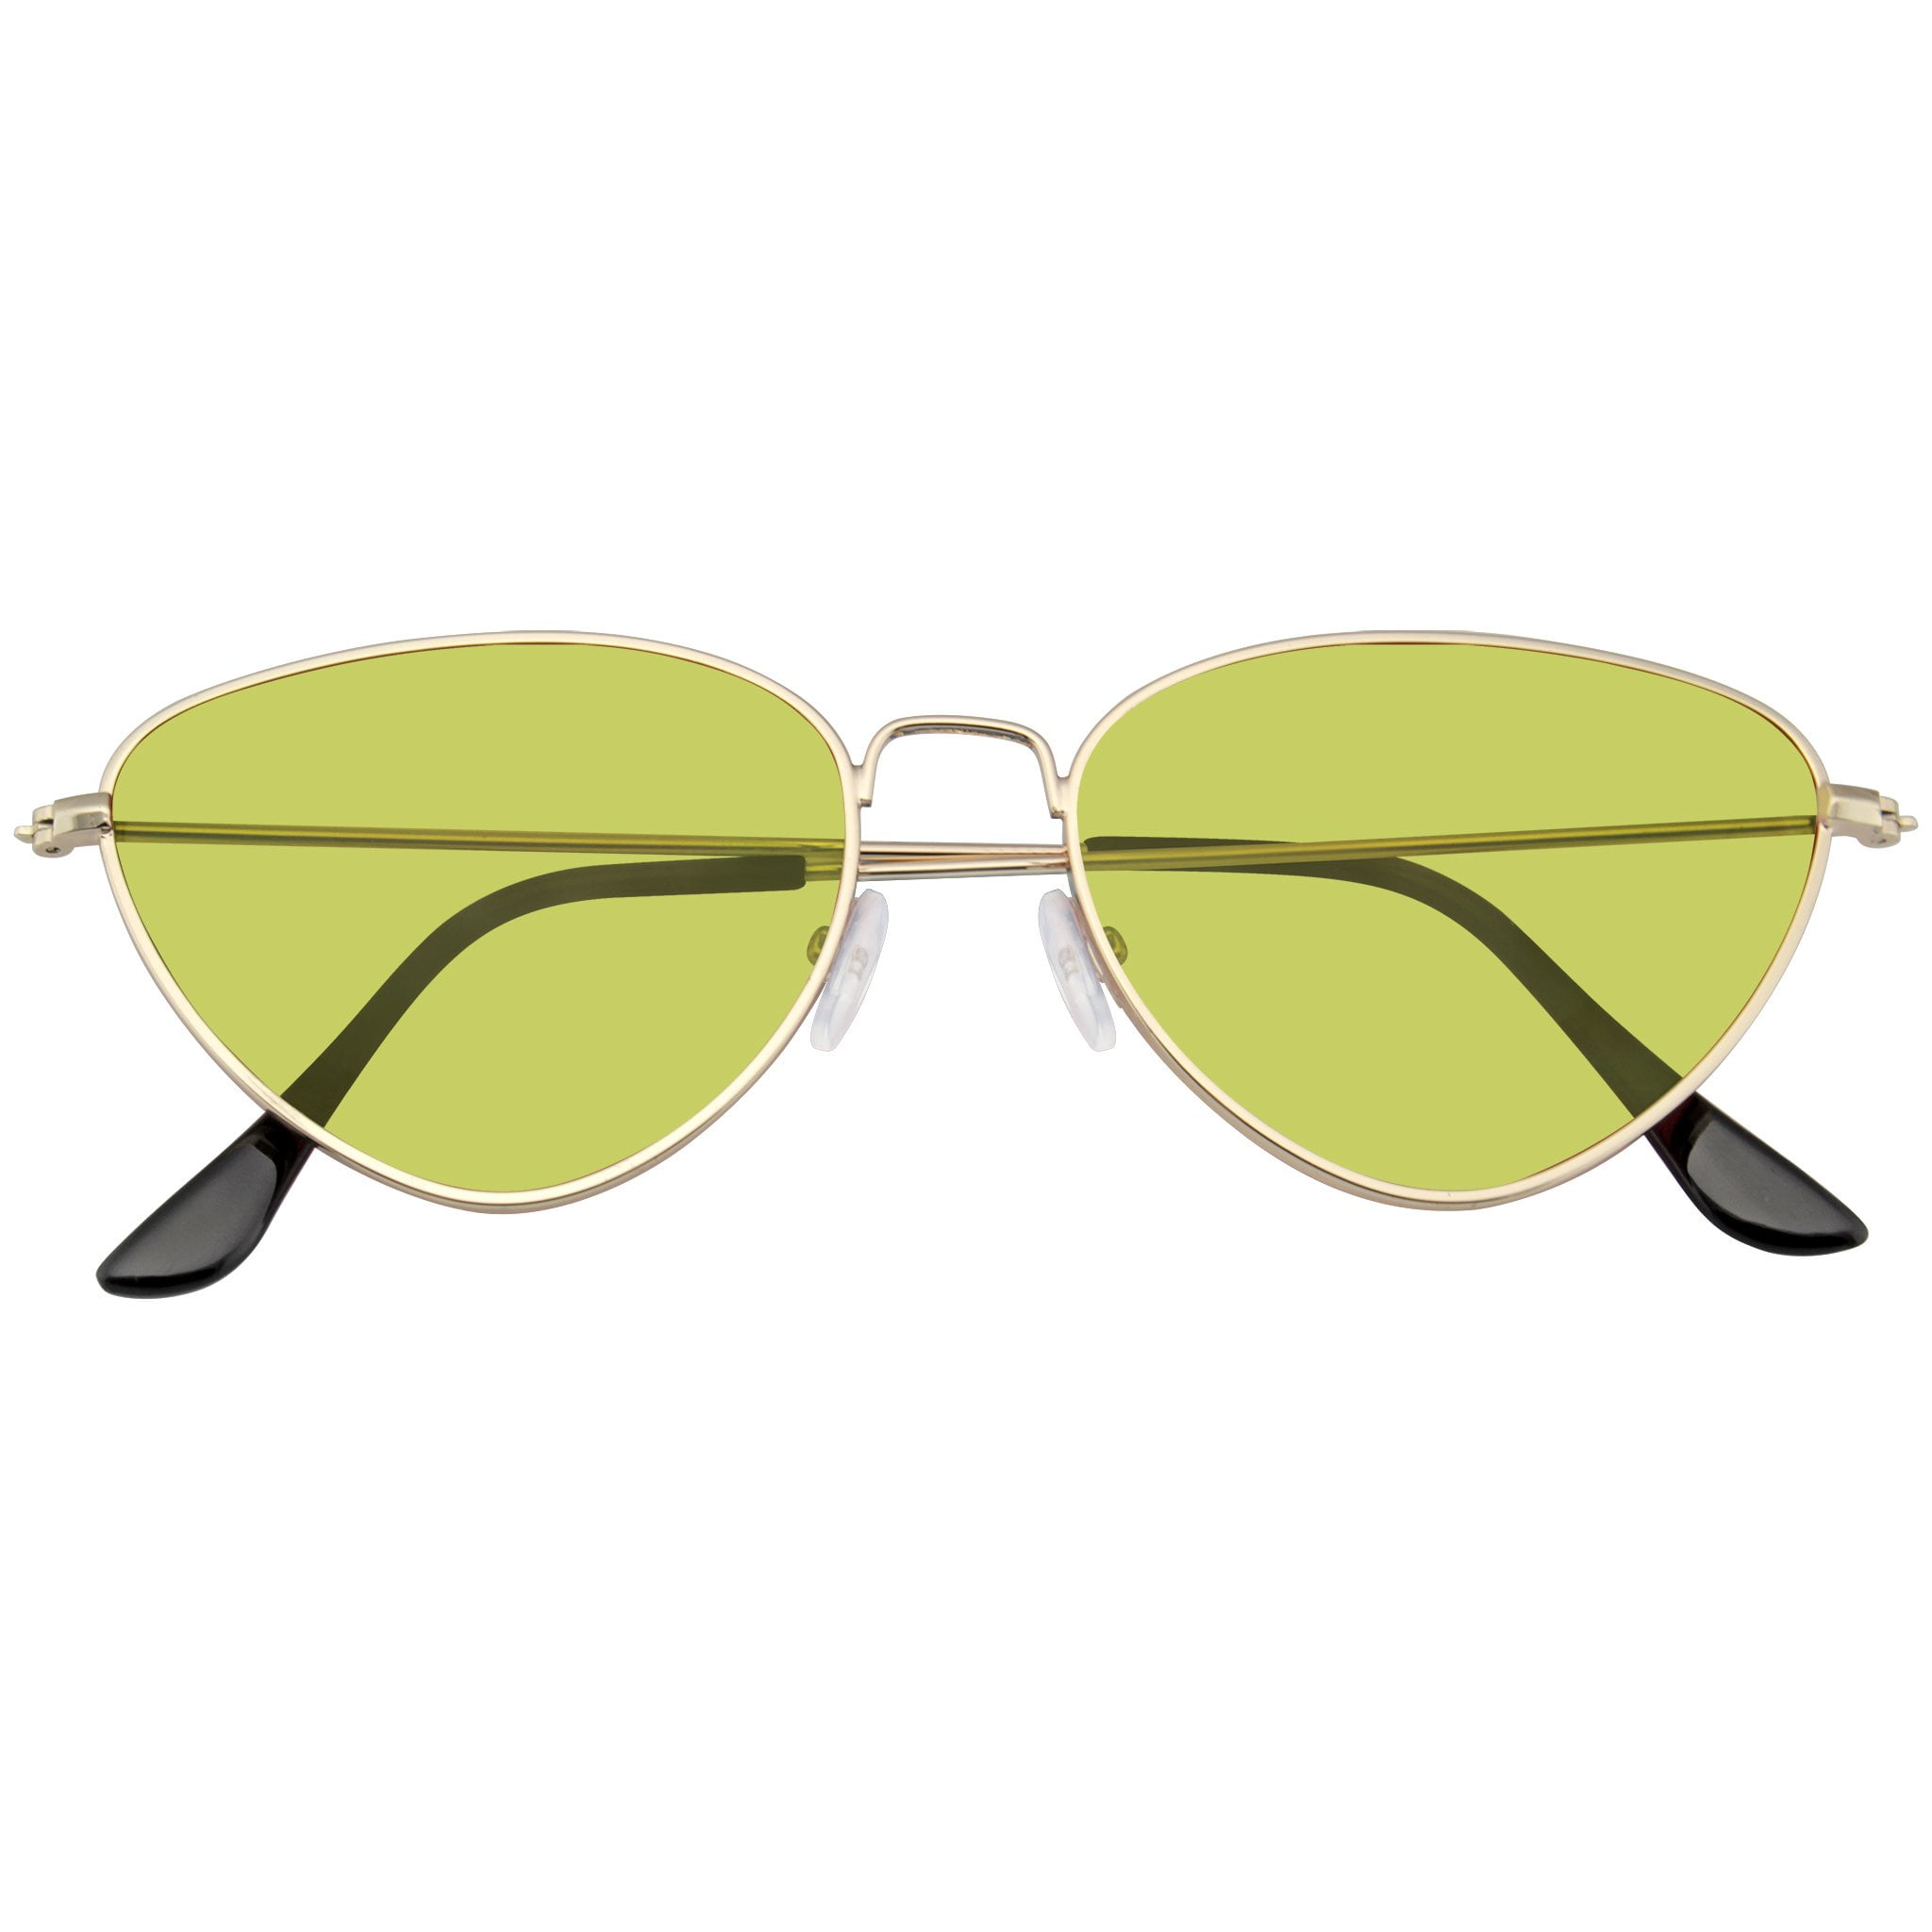 Emblem Eyewear - Sunglasses Retro Vintage Small Triangle Fashion Sun  Glasses UV400 Eyewear 